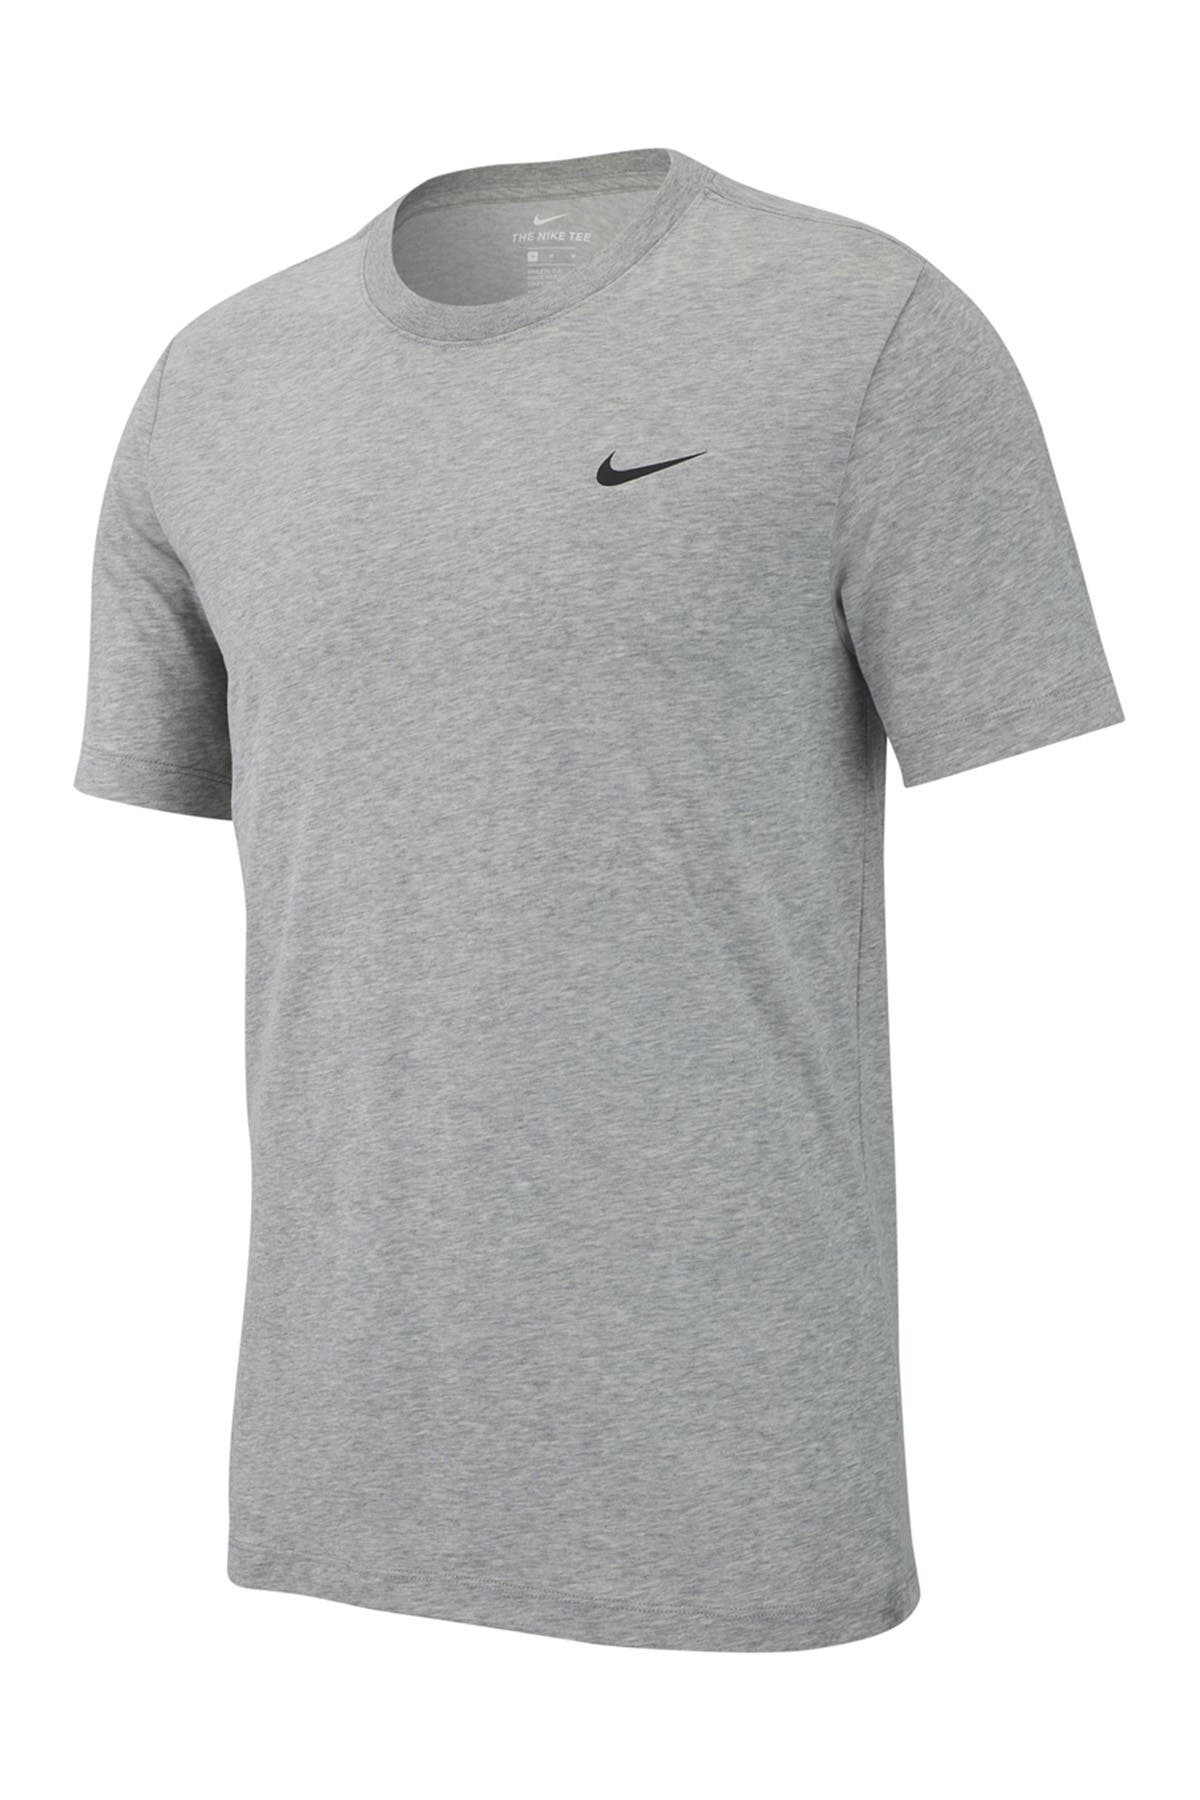 Nike Dri-fit Crew Training T-shirt In Open Grey3